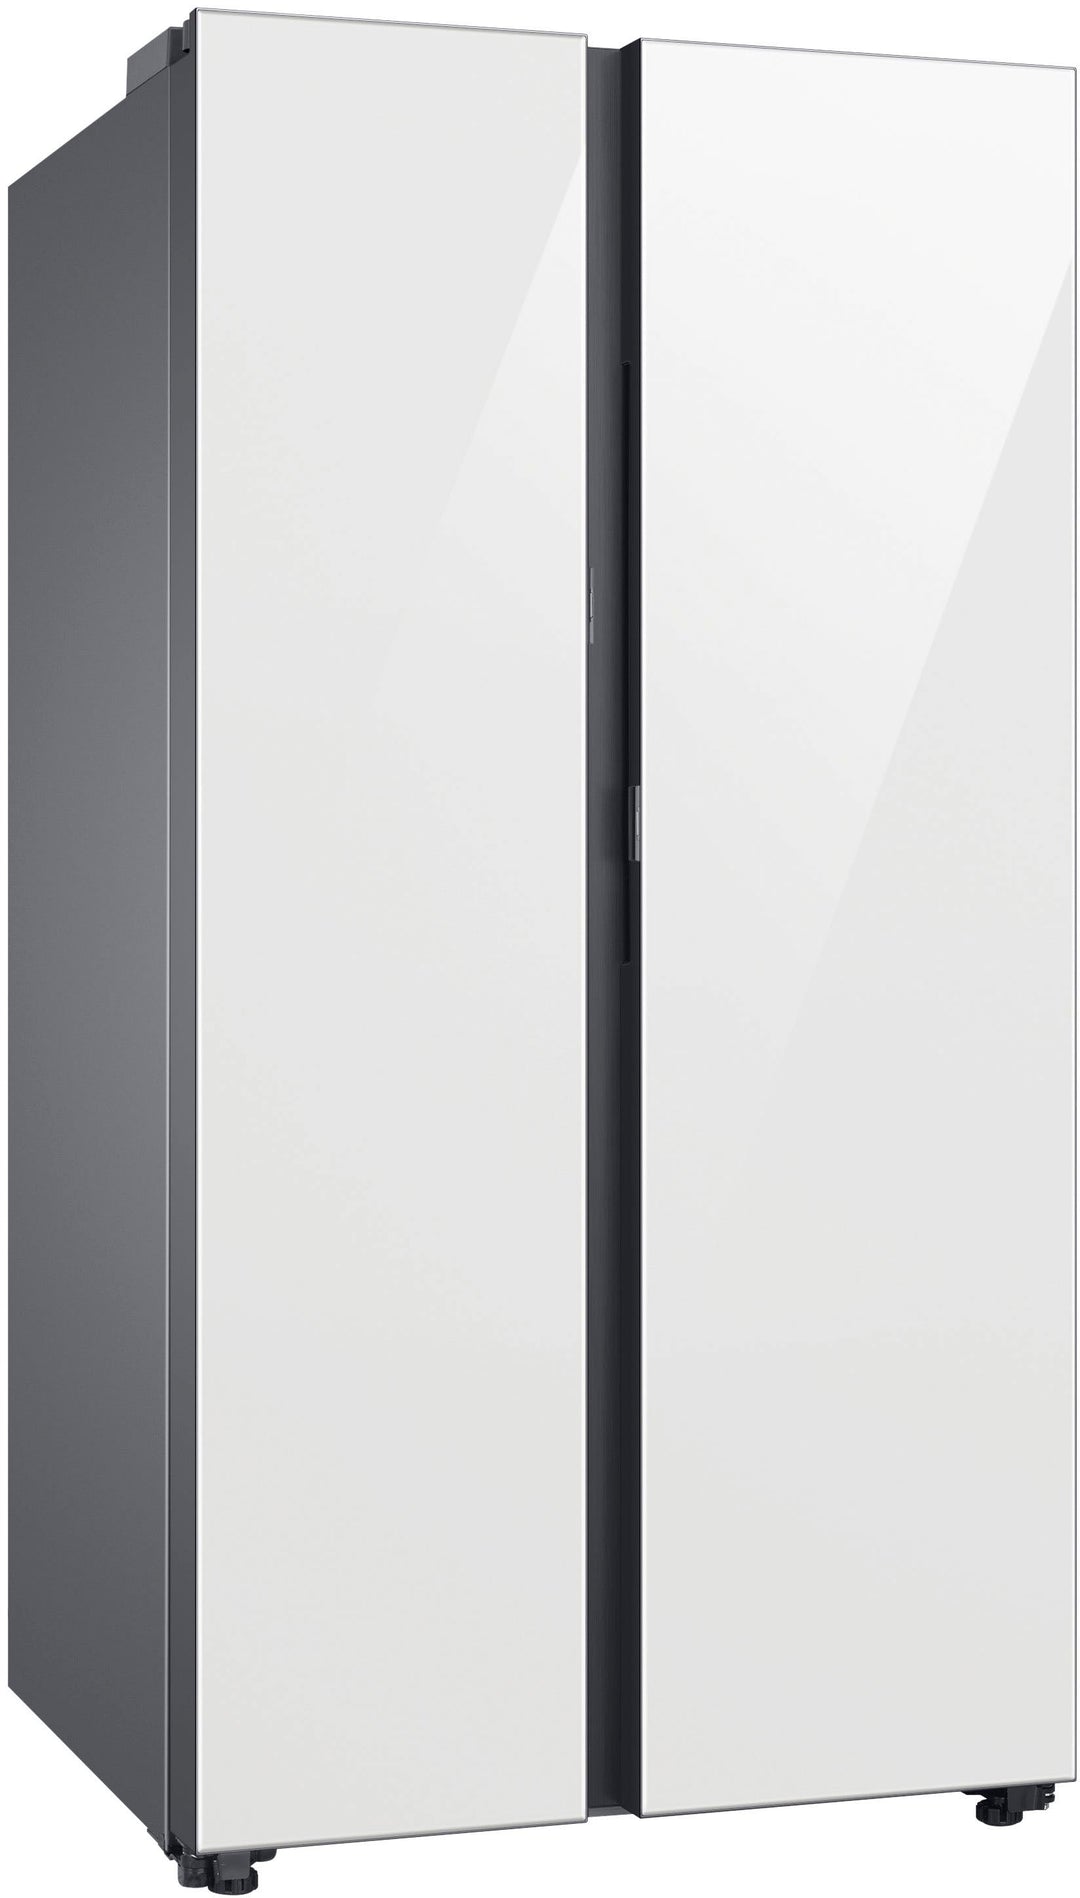 Samsung - BESPOKE Side-by-Side Smart Refrigerator with Beverage Center - White Glass